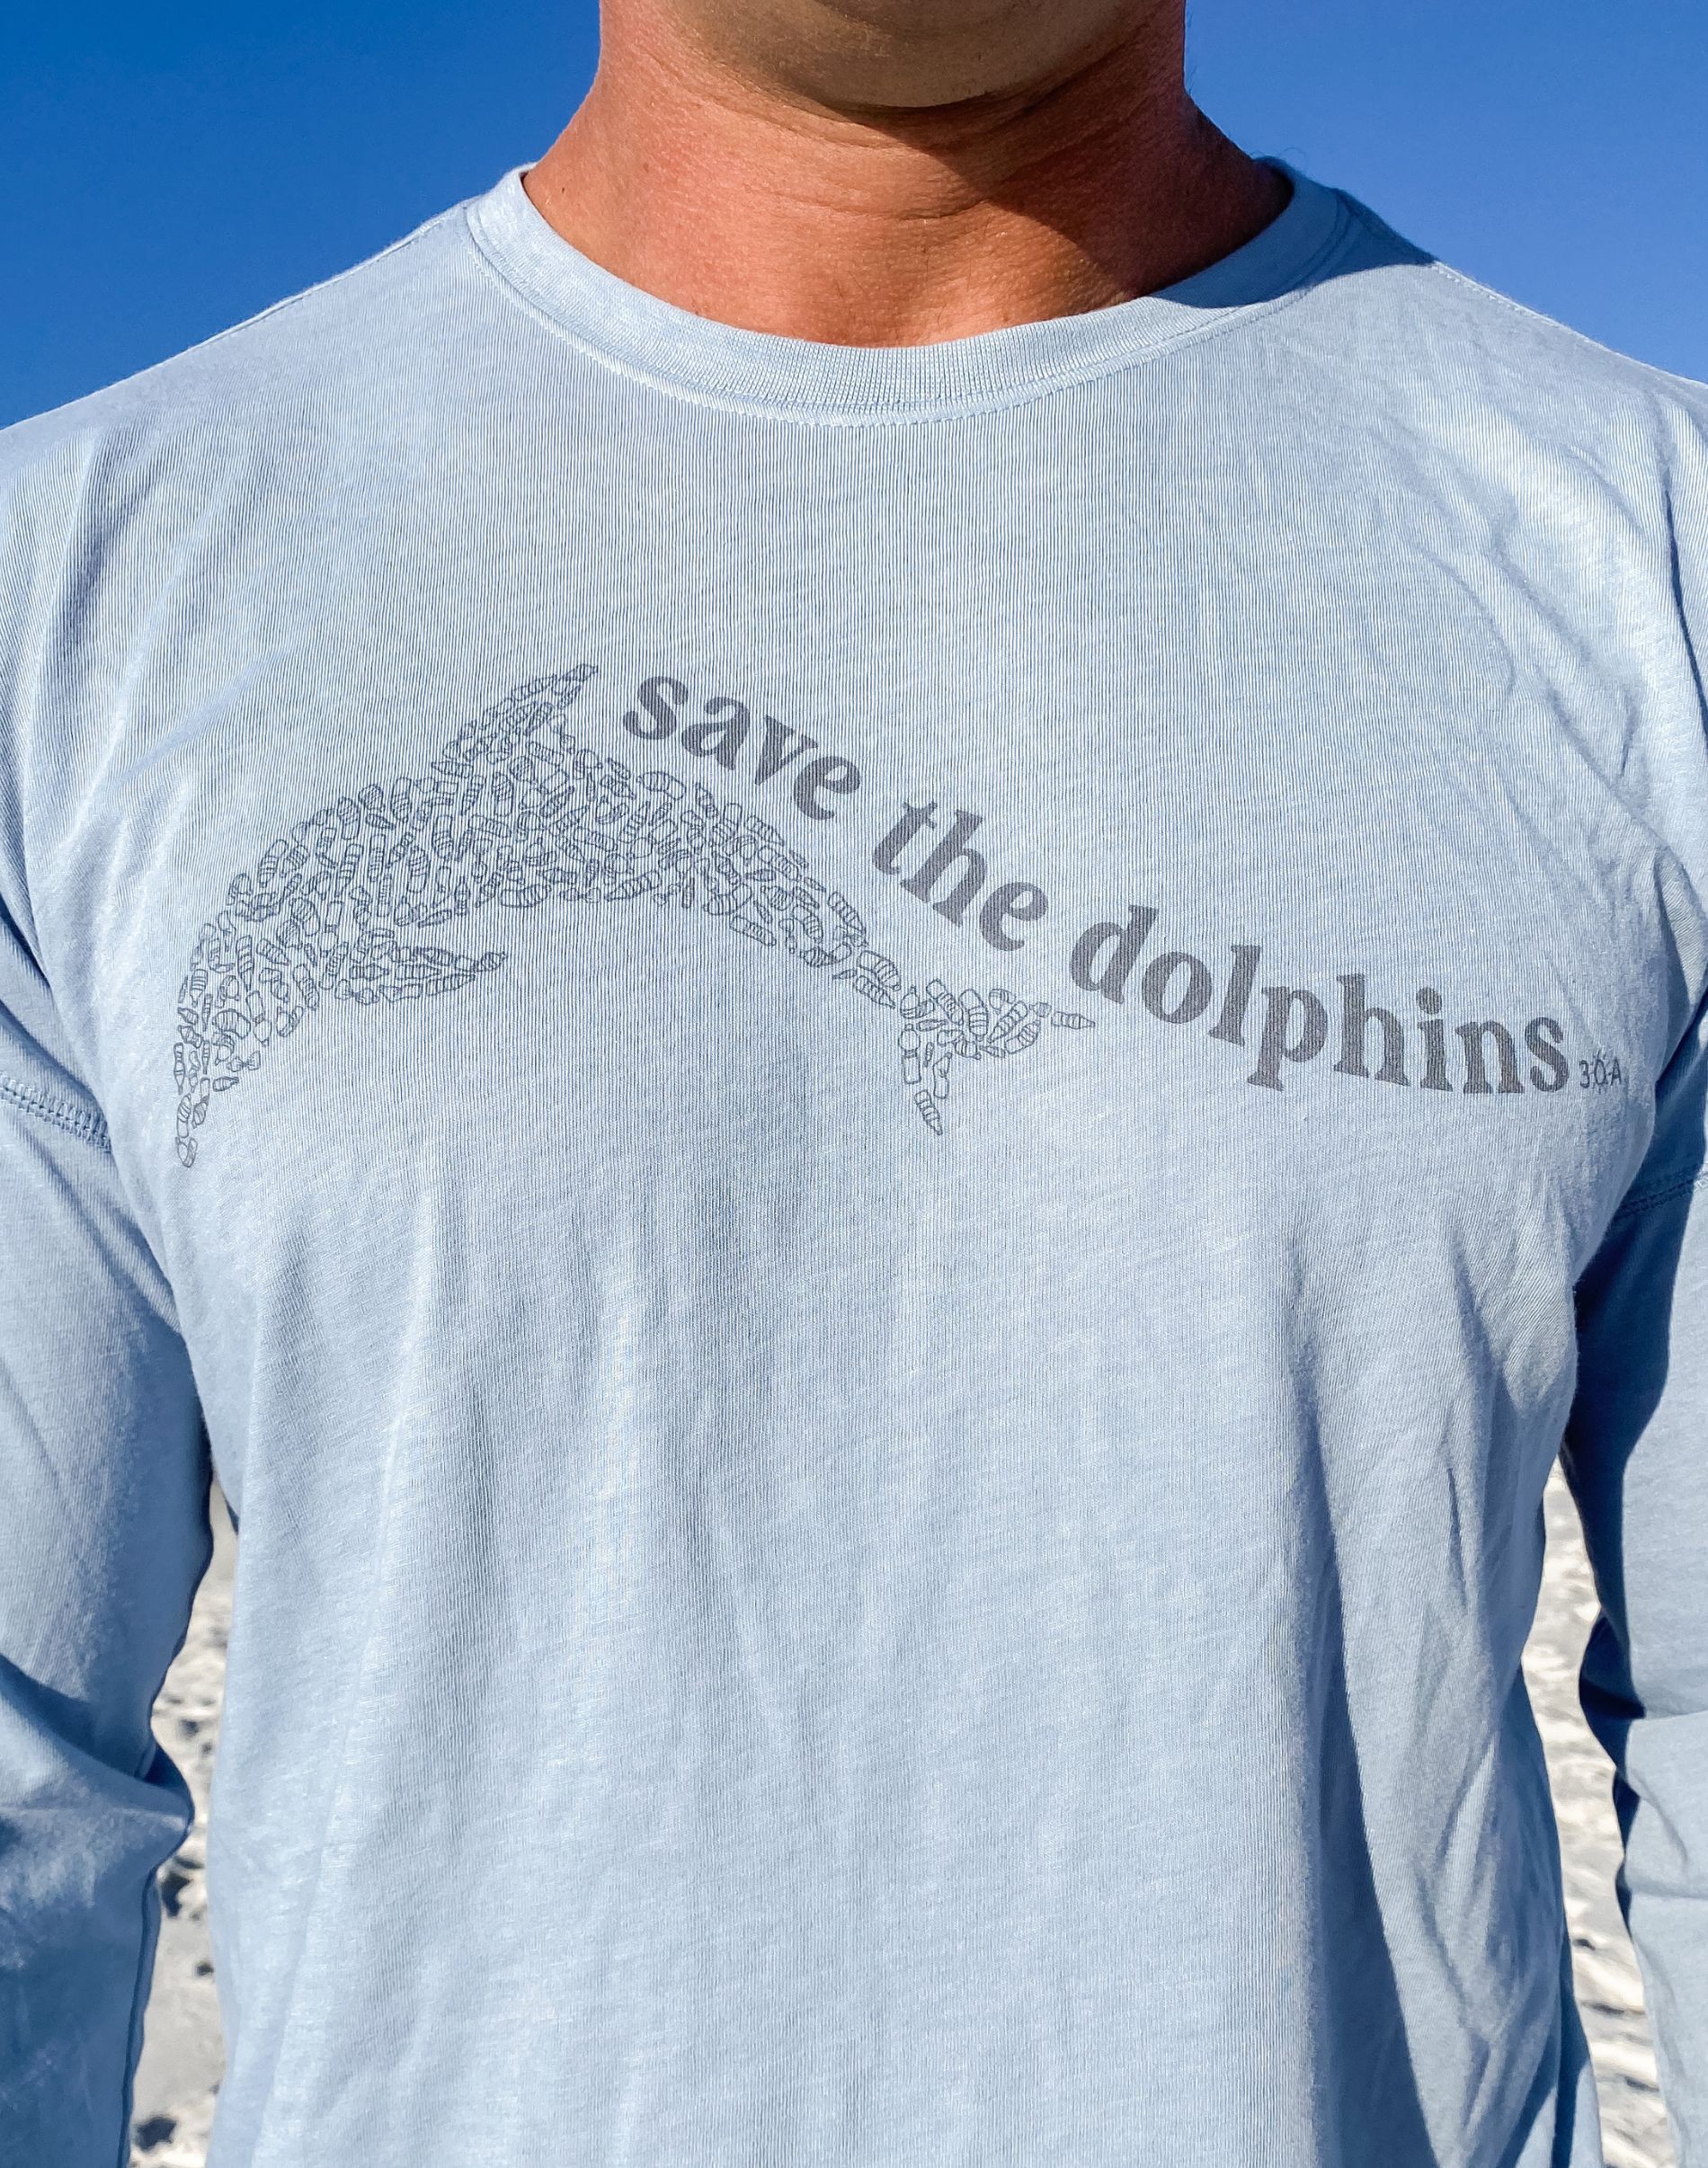 Save the Dolphins Men Long Sleeve Tee - Dusty Blue - 30A Gear